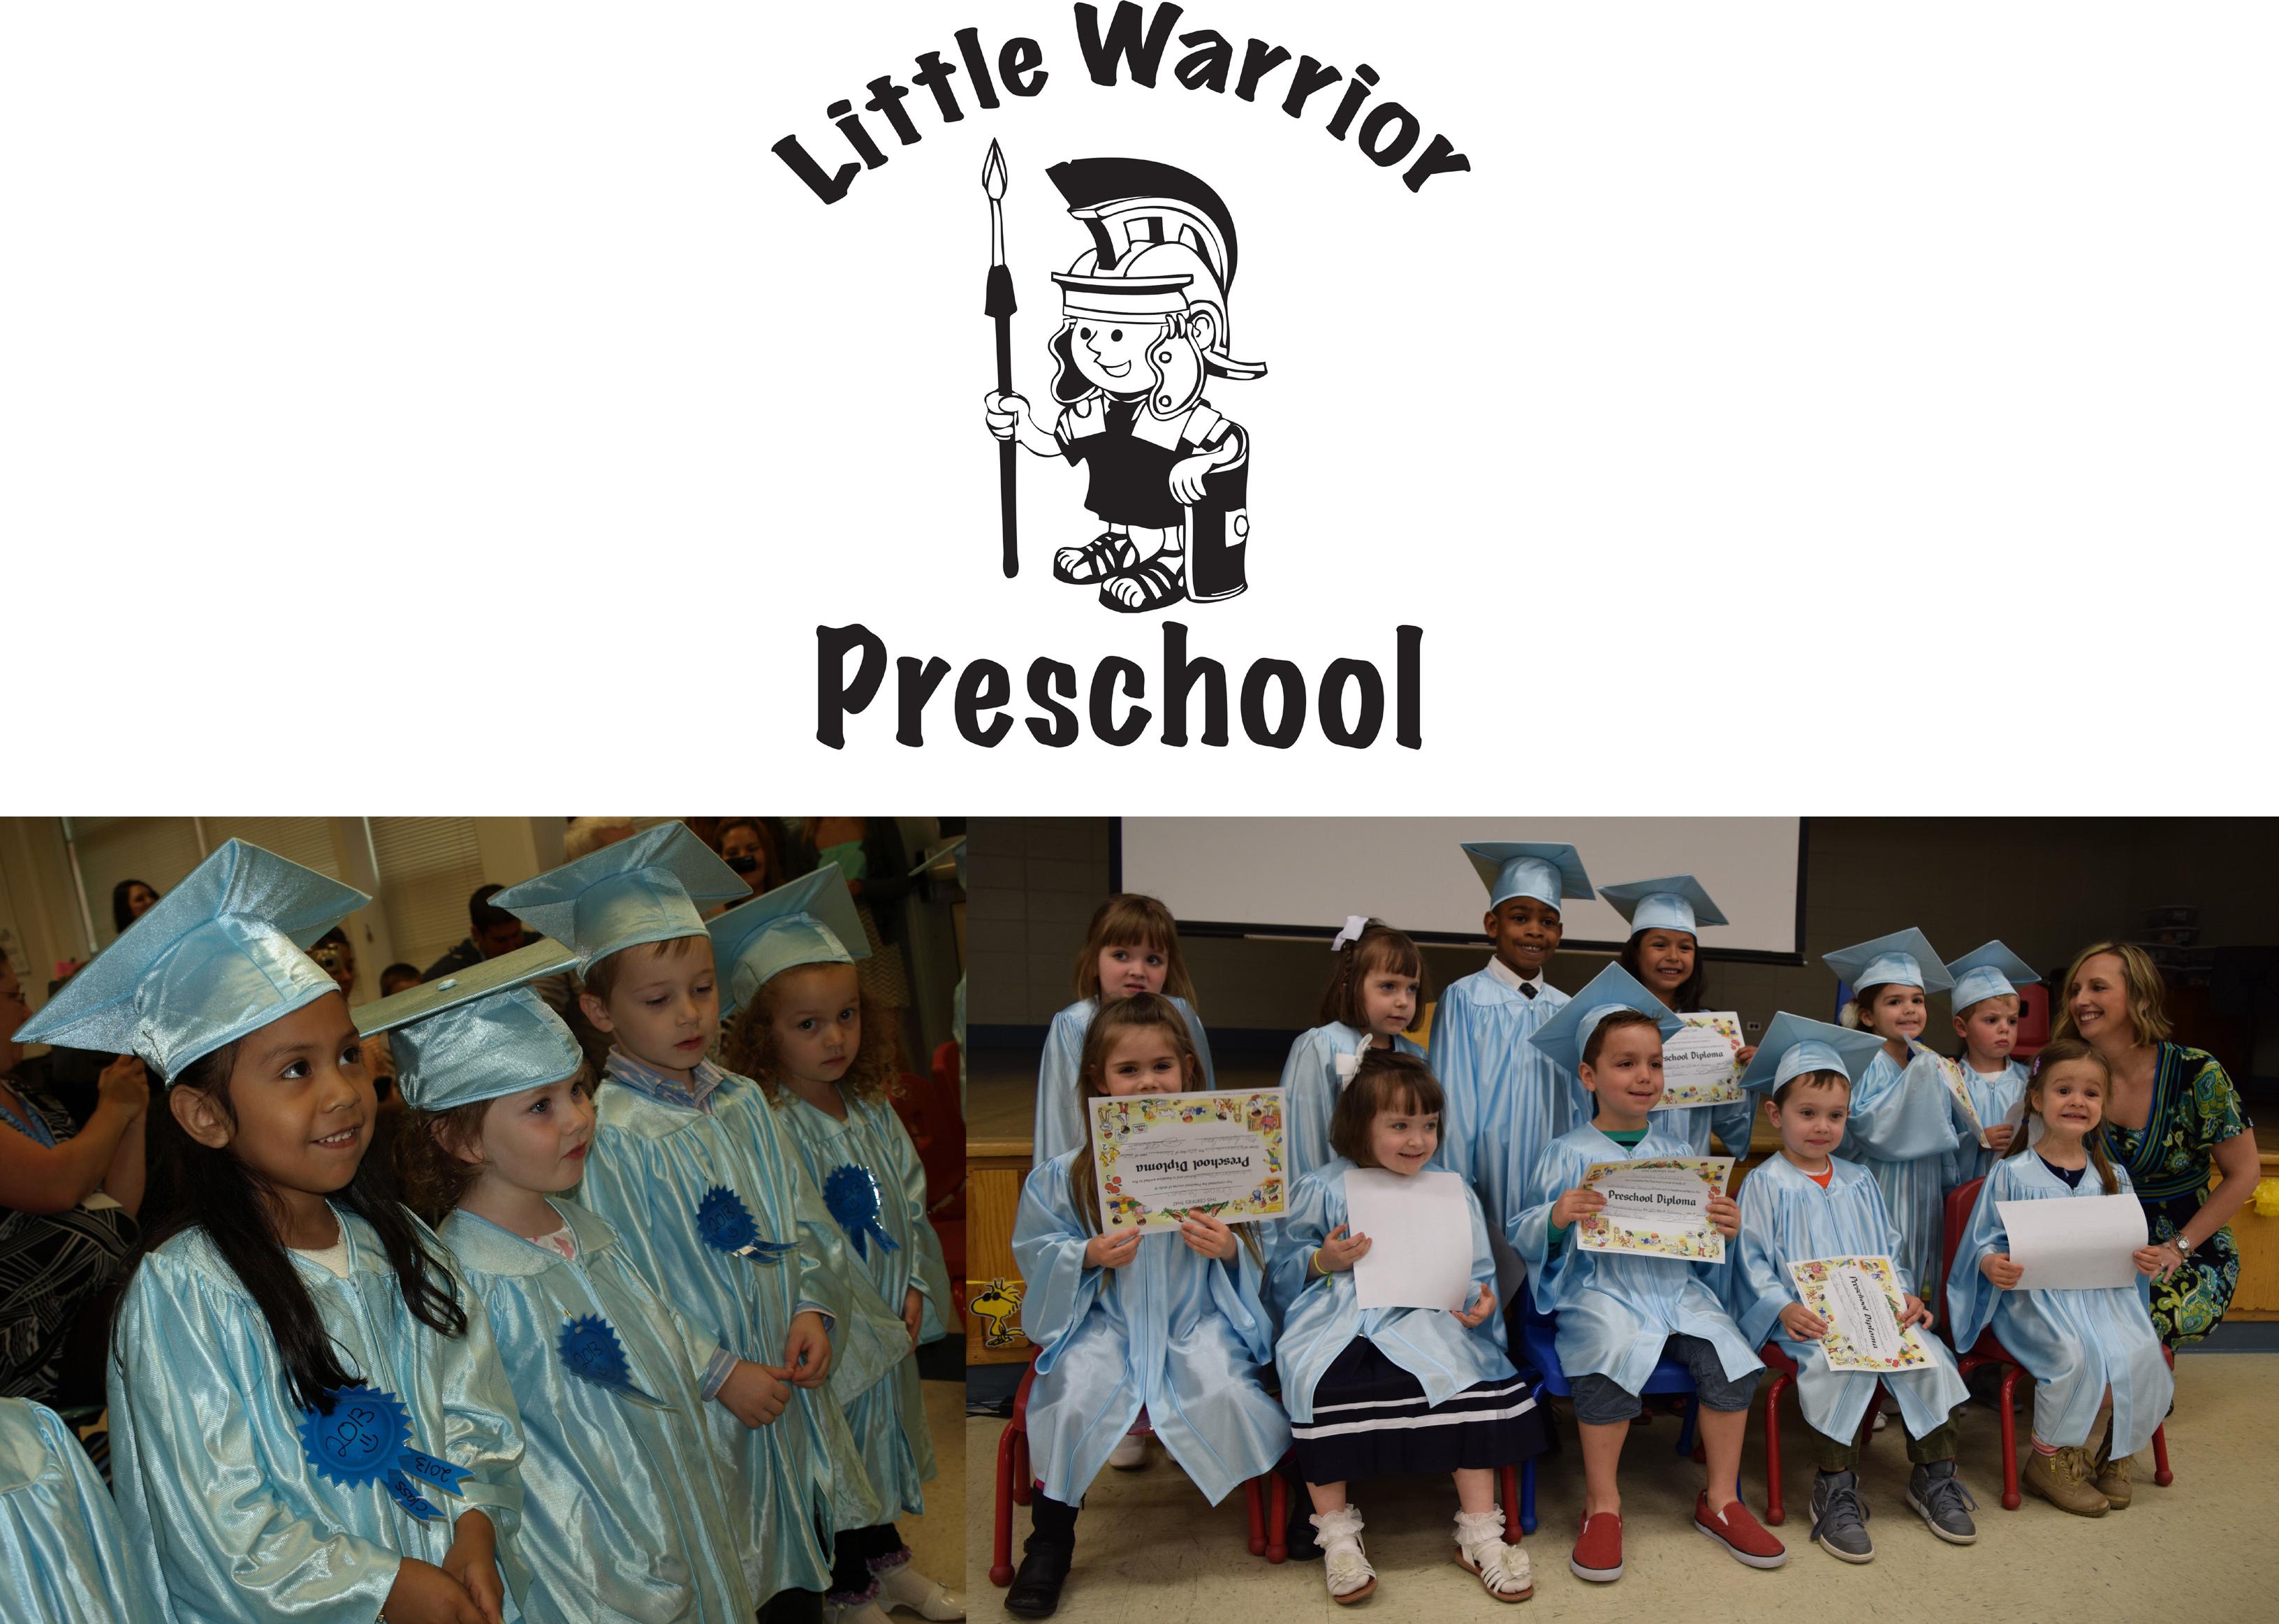 Registration is open for Willowbrook’s Little Warrior Preschool program